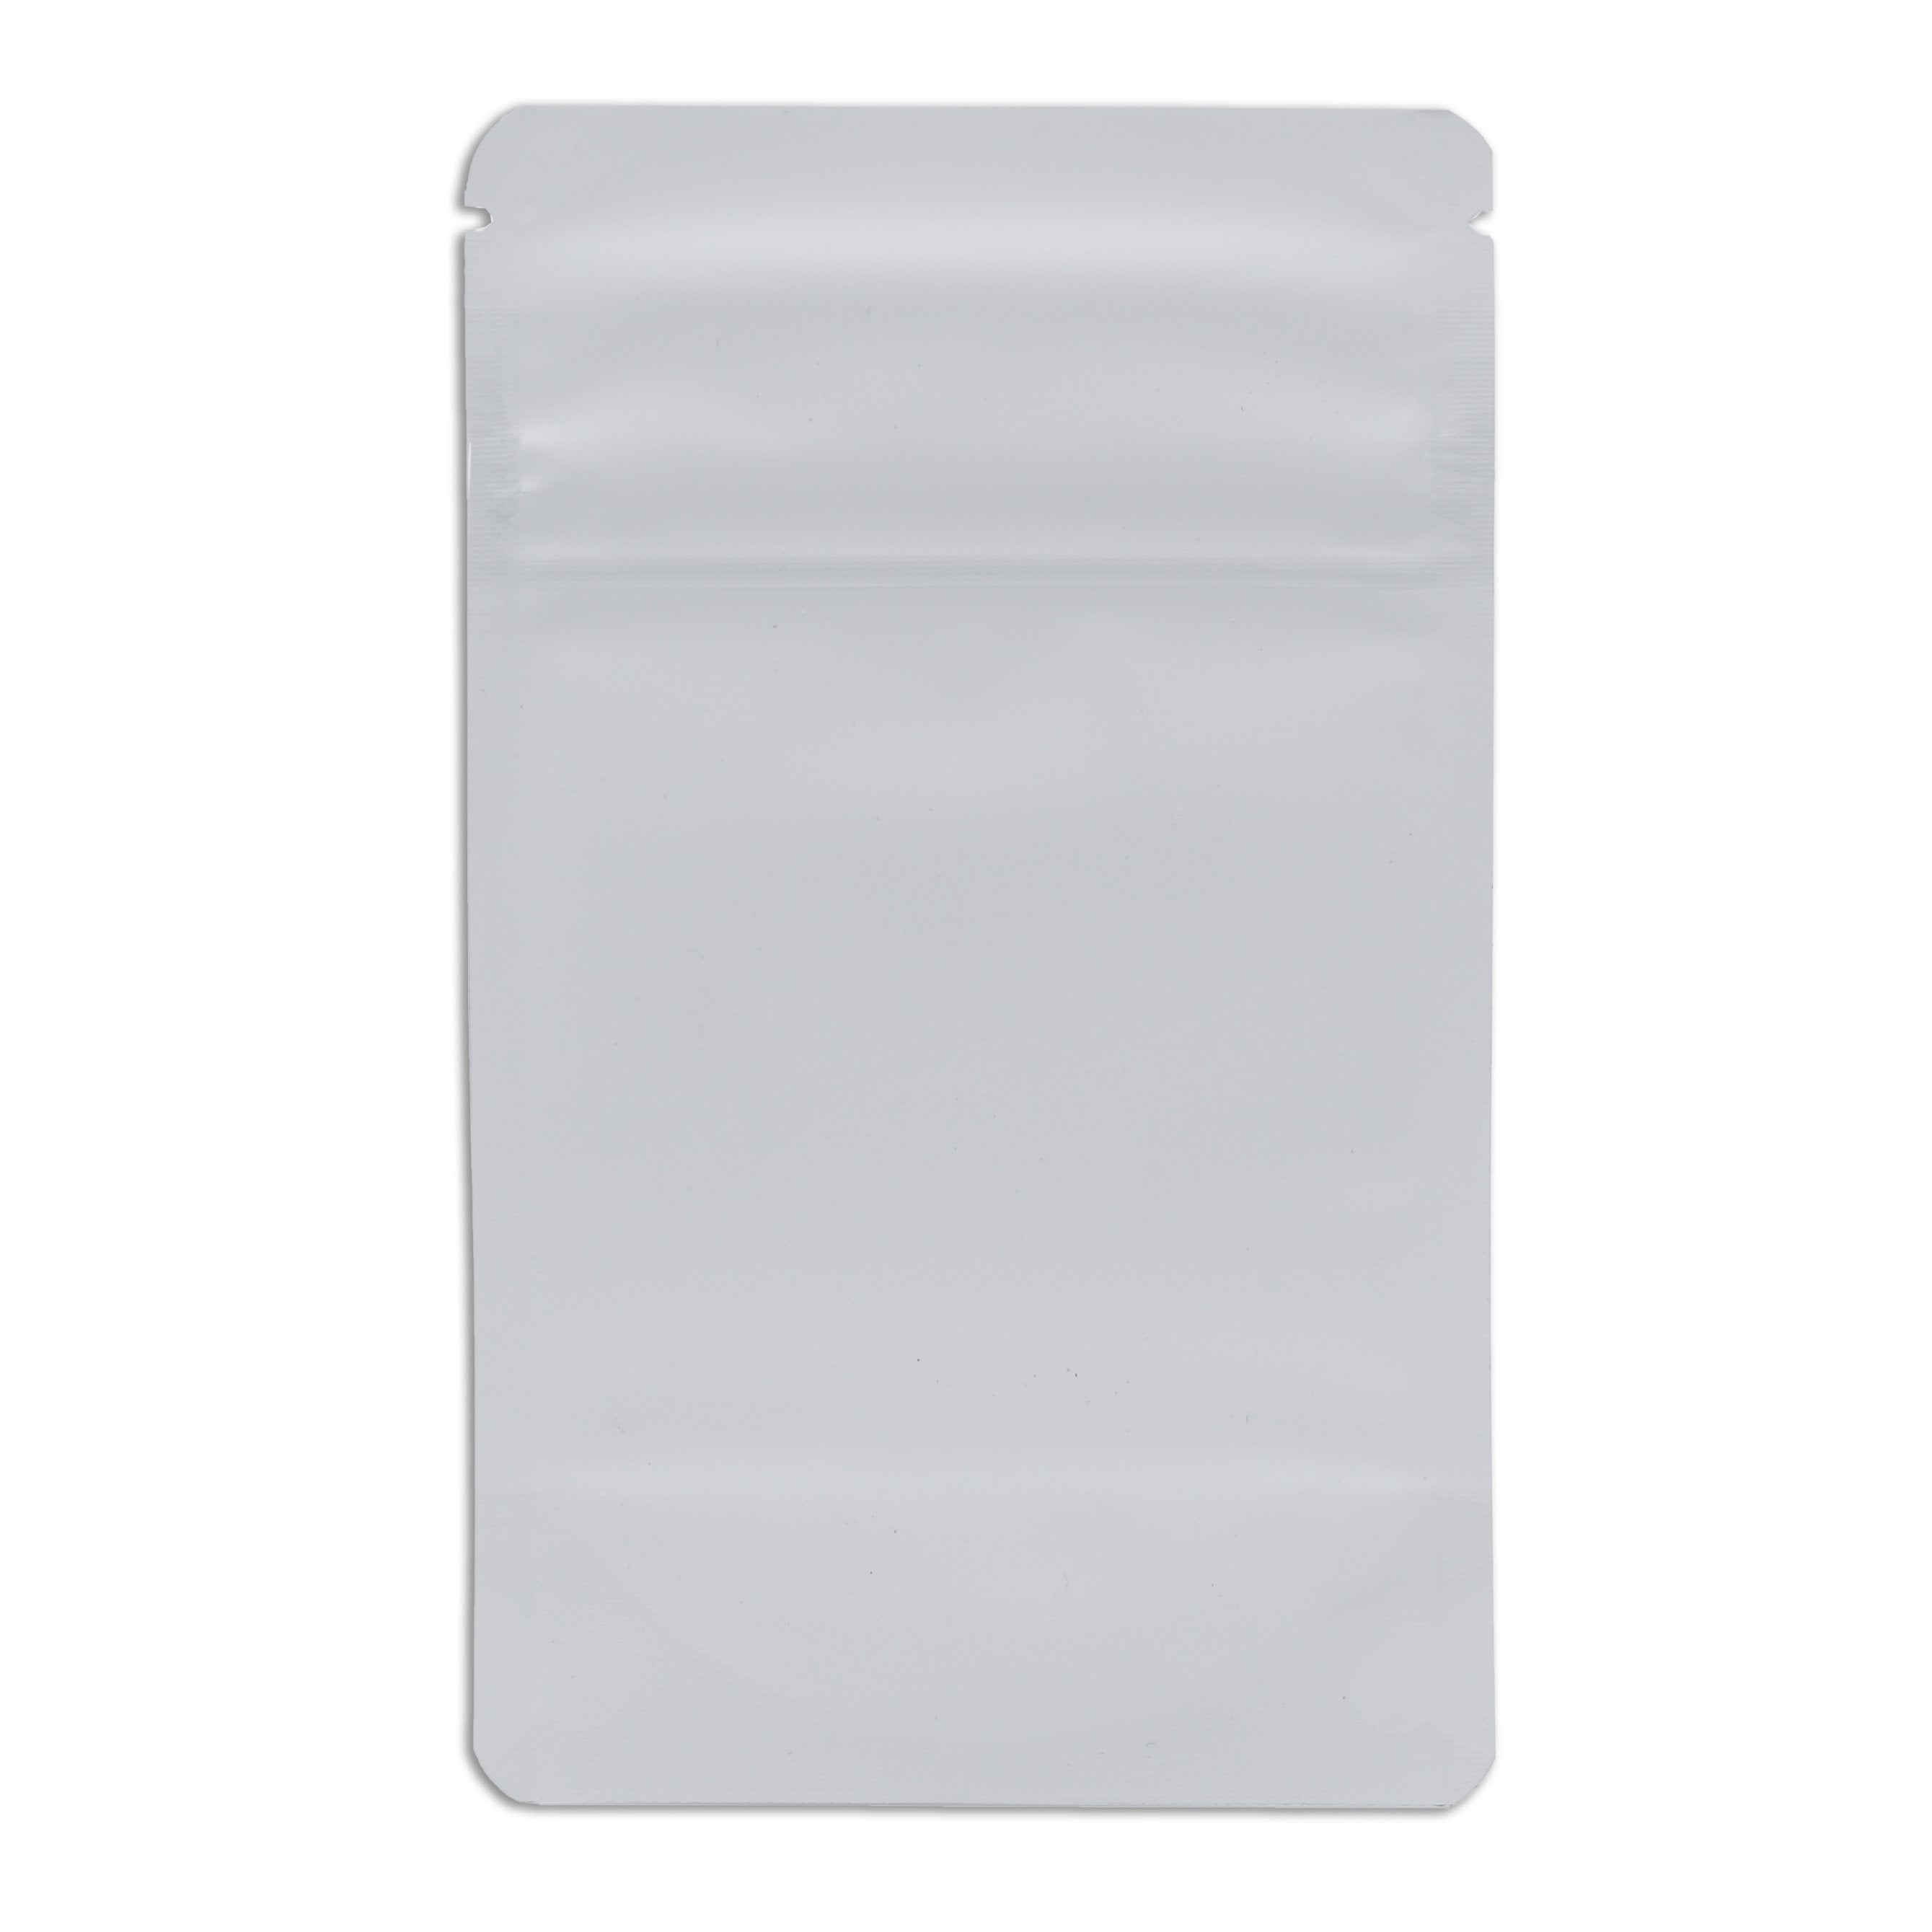 Bag King Child-Resistant Clear Front Bag (1/8th oz) Matte White